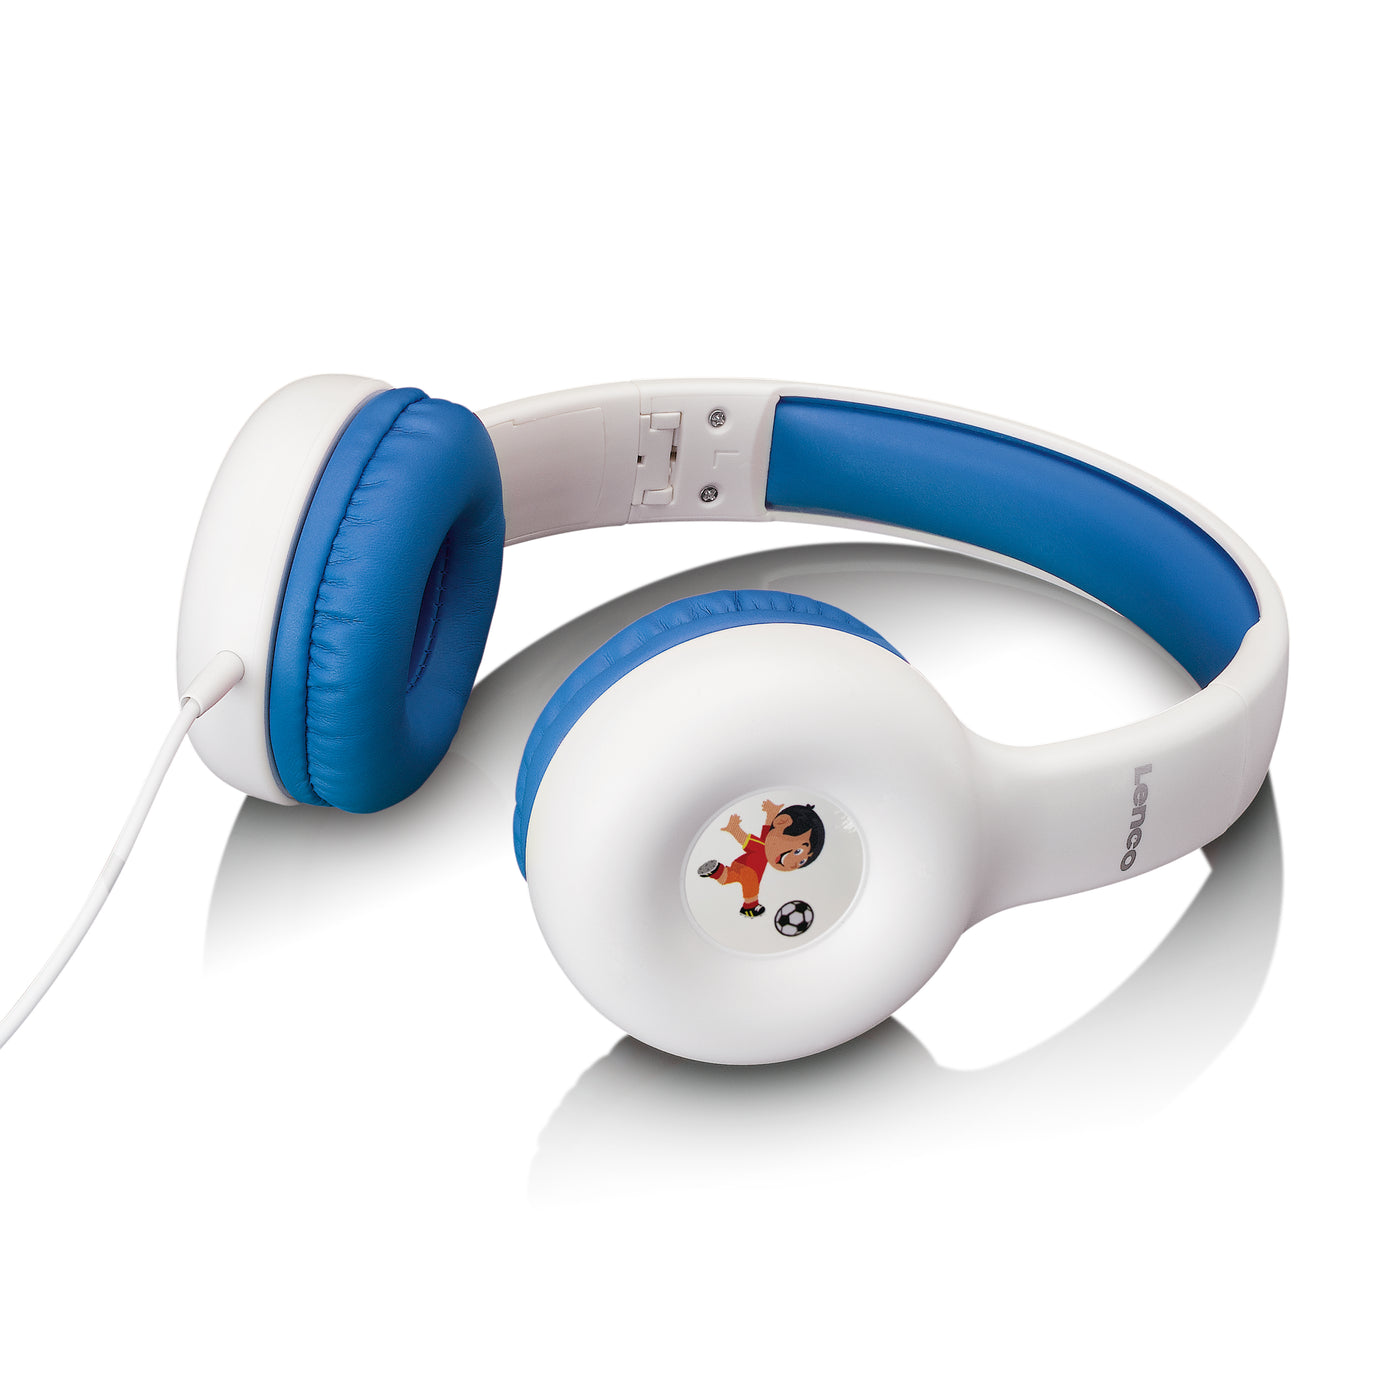 LENCO HP-010BU - Headphone for kids, blue